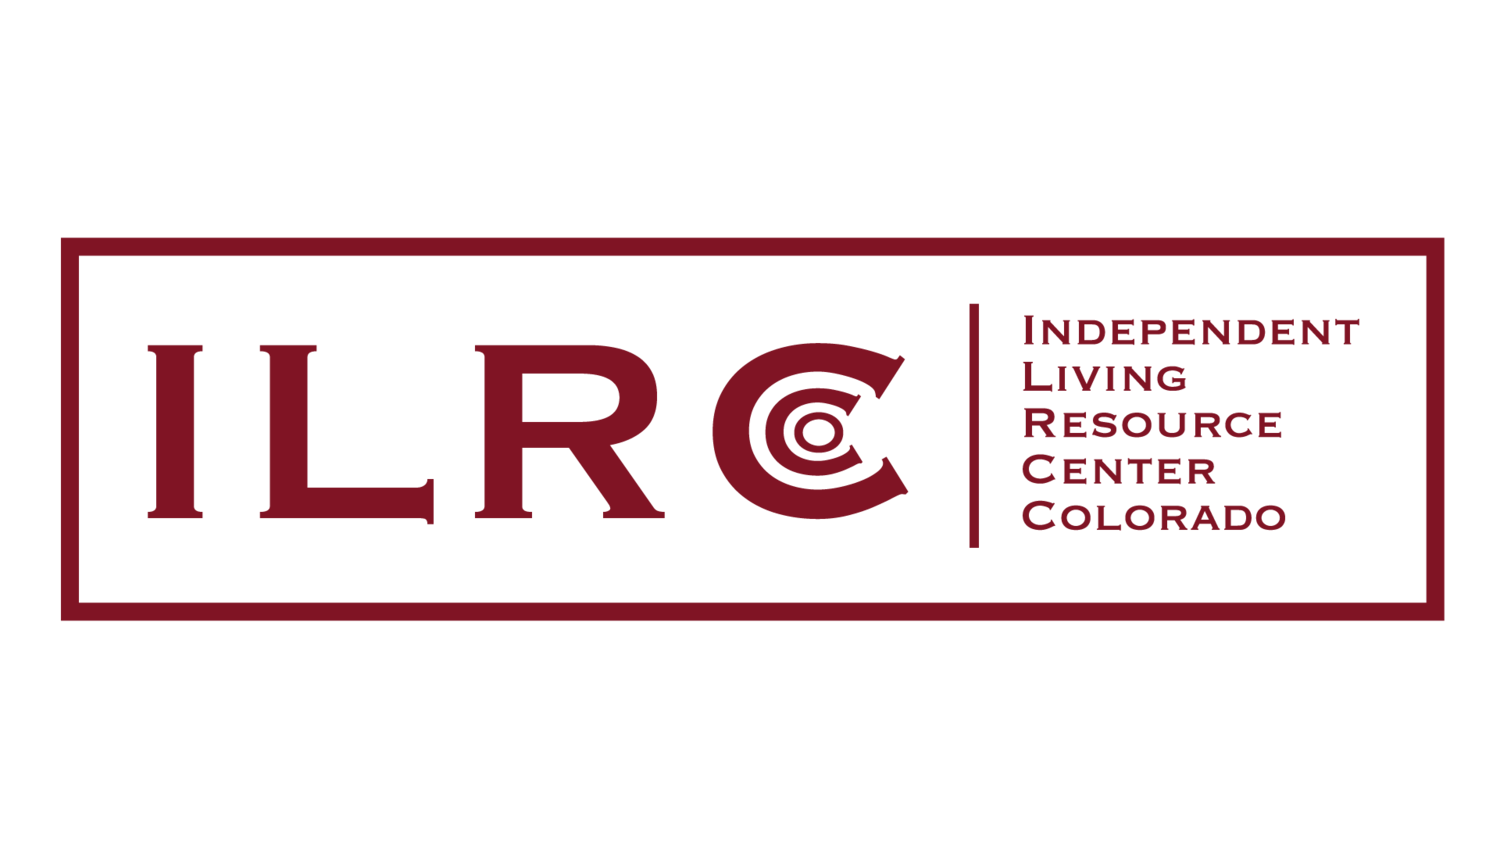 Independent Living Resource Center Colorado